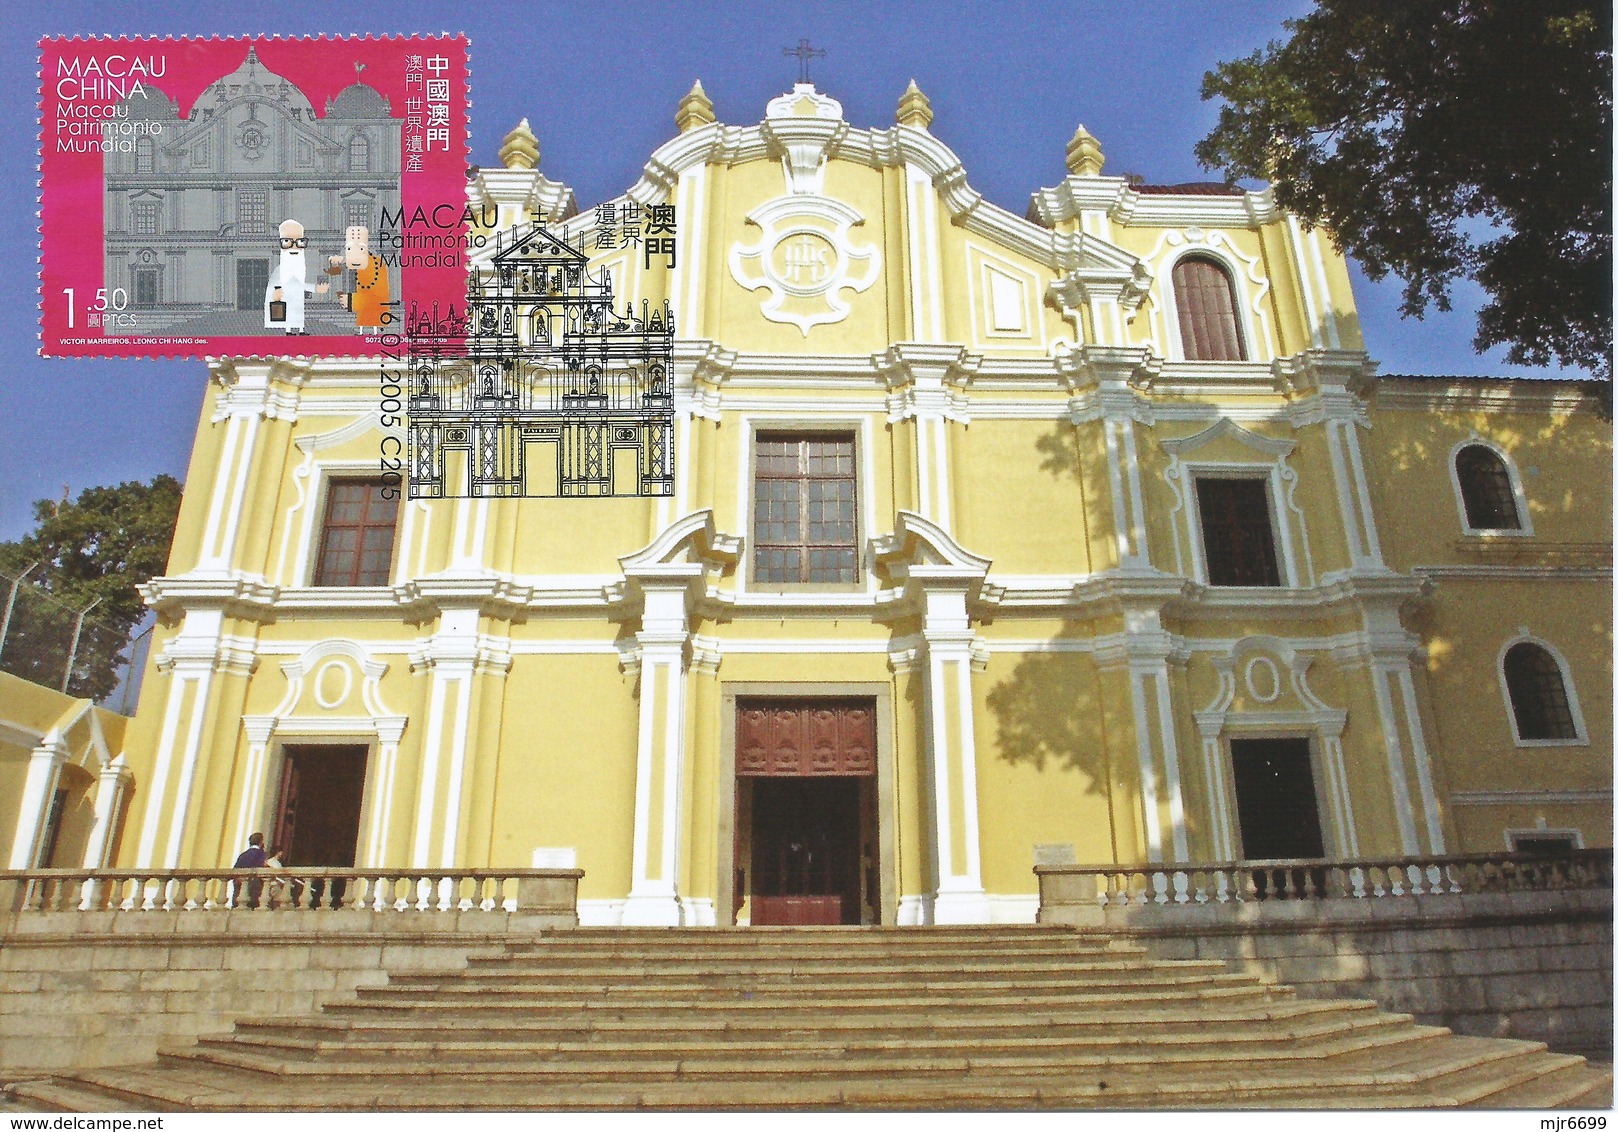 MACAU DOM PEDRO V THEATRE, TEMPLE AH MA, ST. JOSEPH CHURCH,MANDARIM HOUSE ALL PRINTED BY MACAO POST MAX POST CARDS - Macau